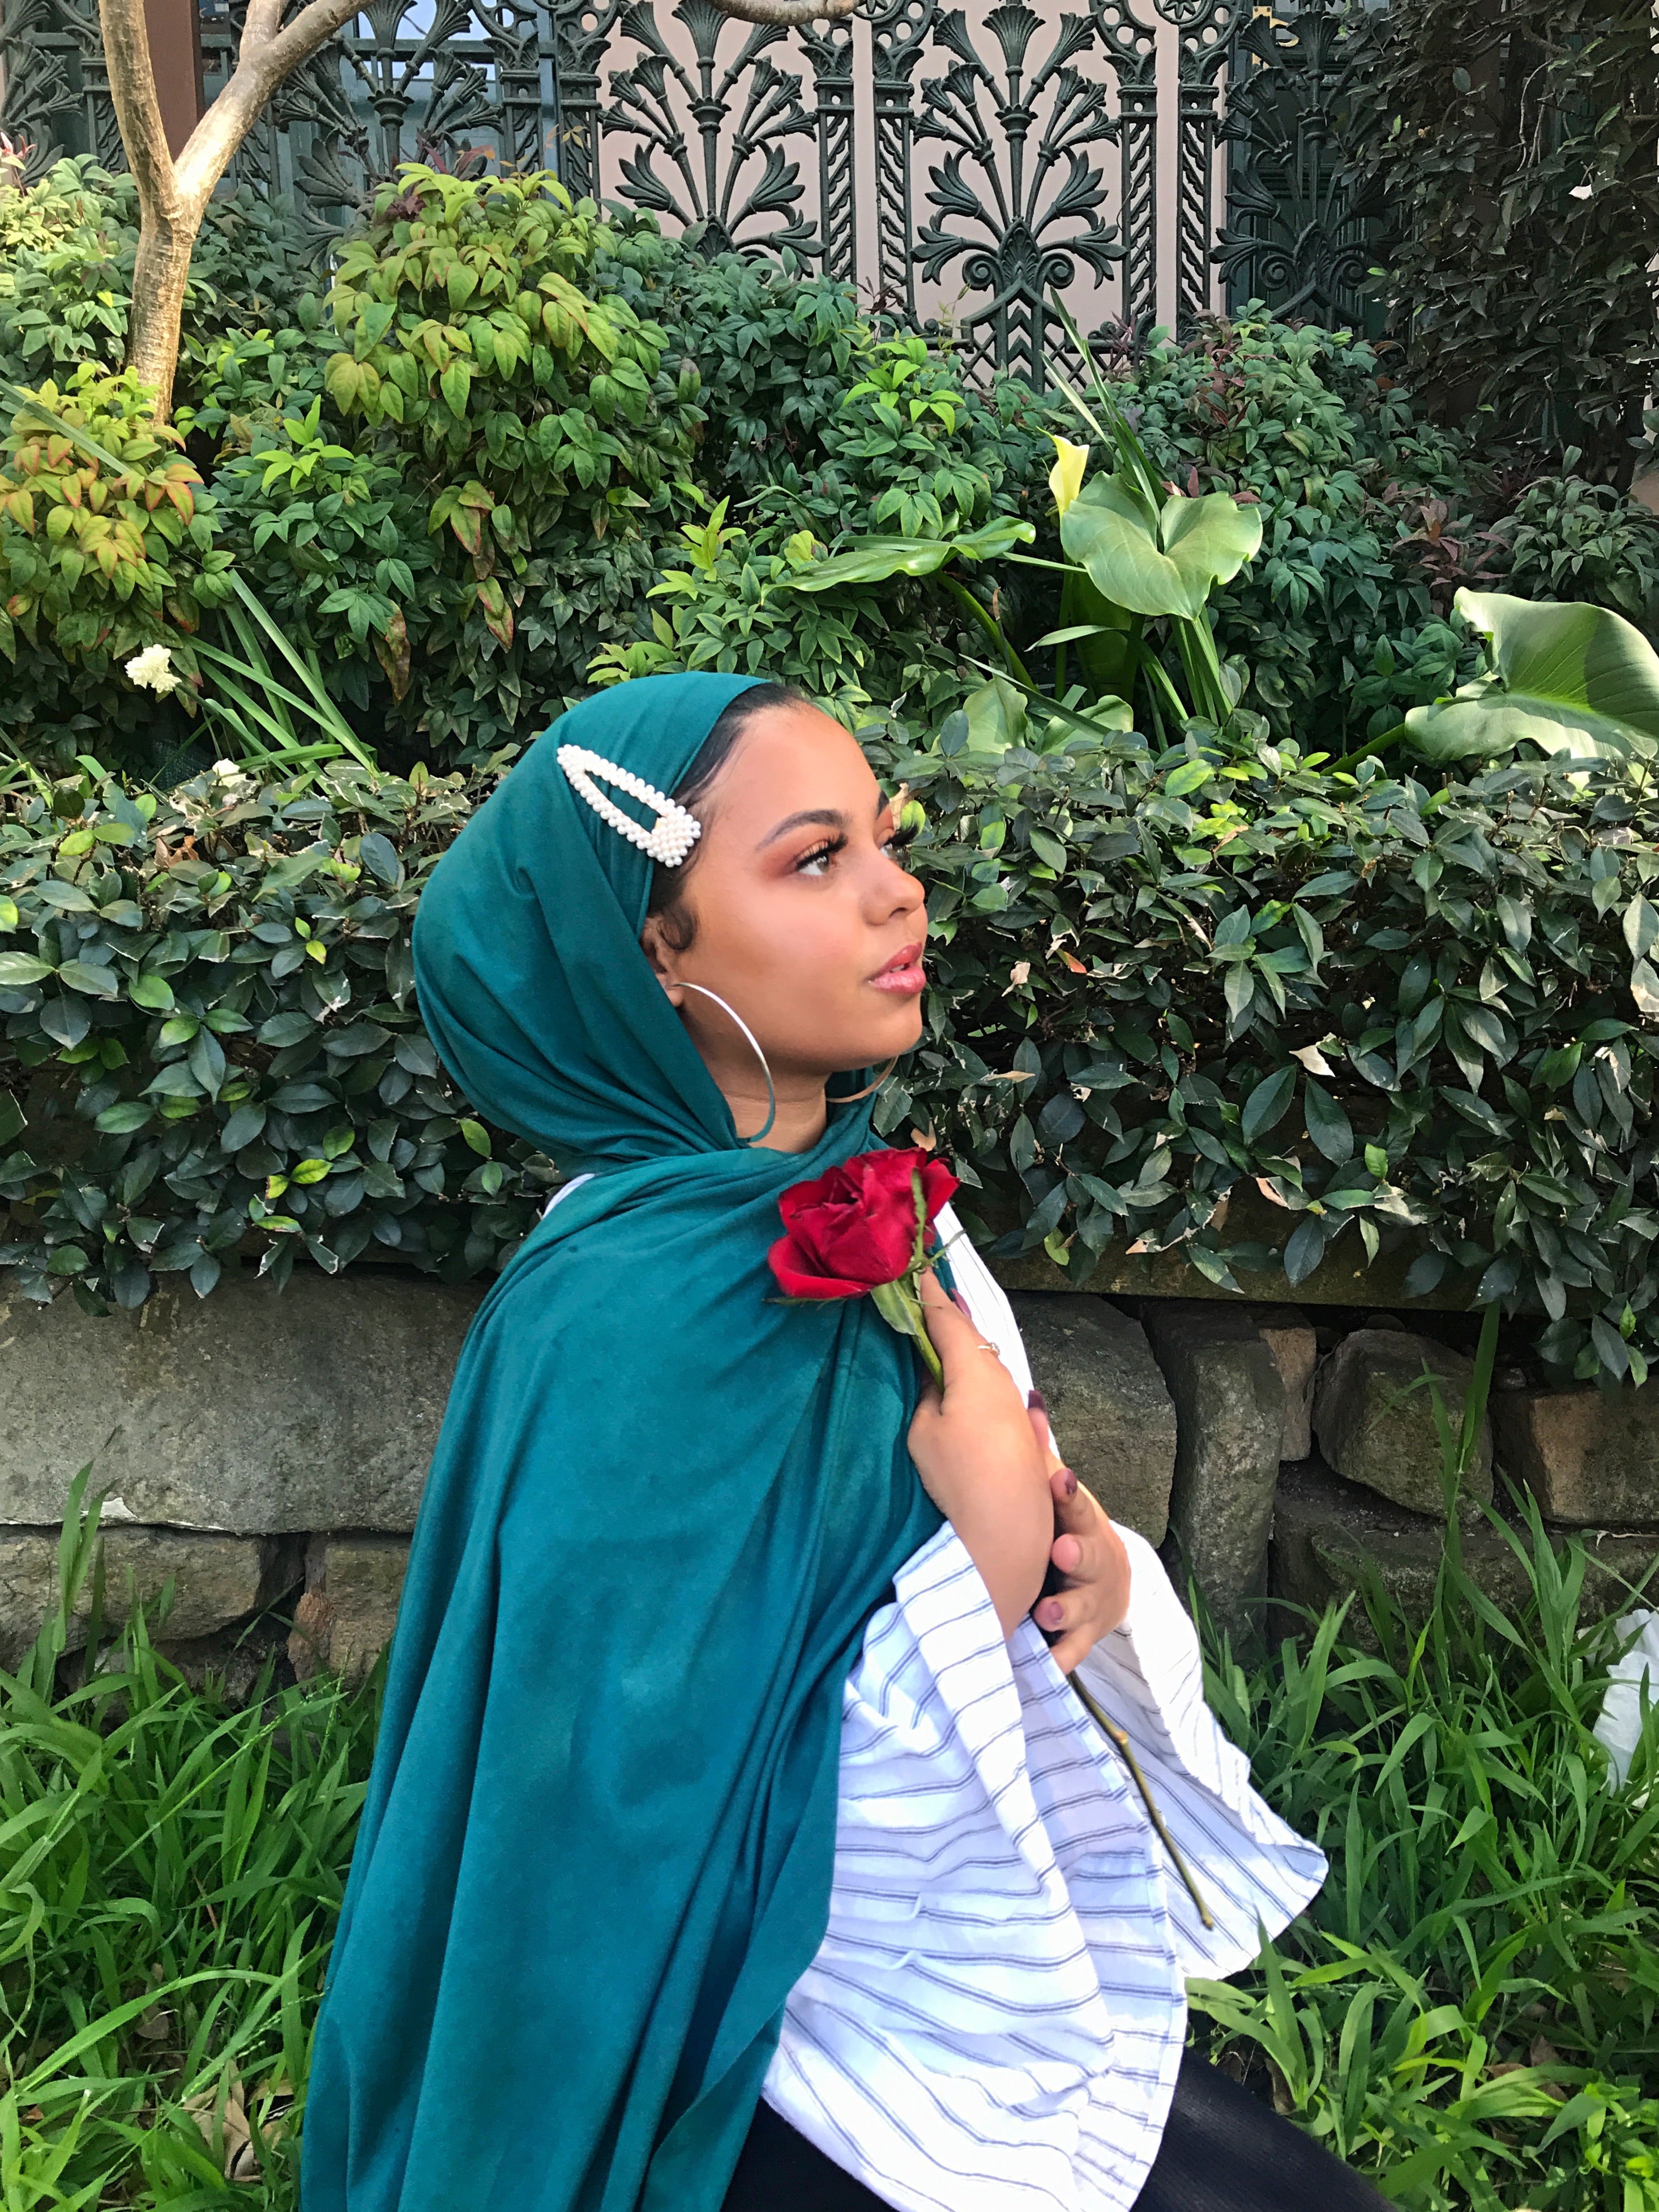 Emerald Green Suede Hijab